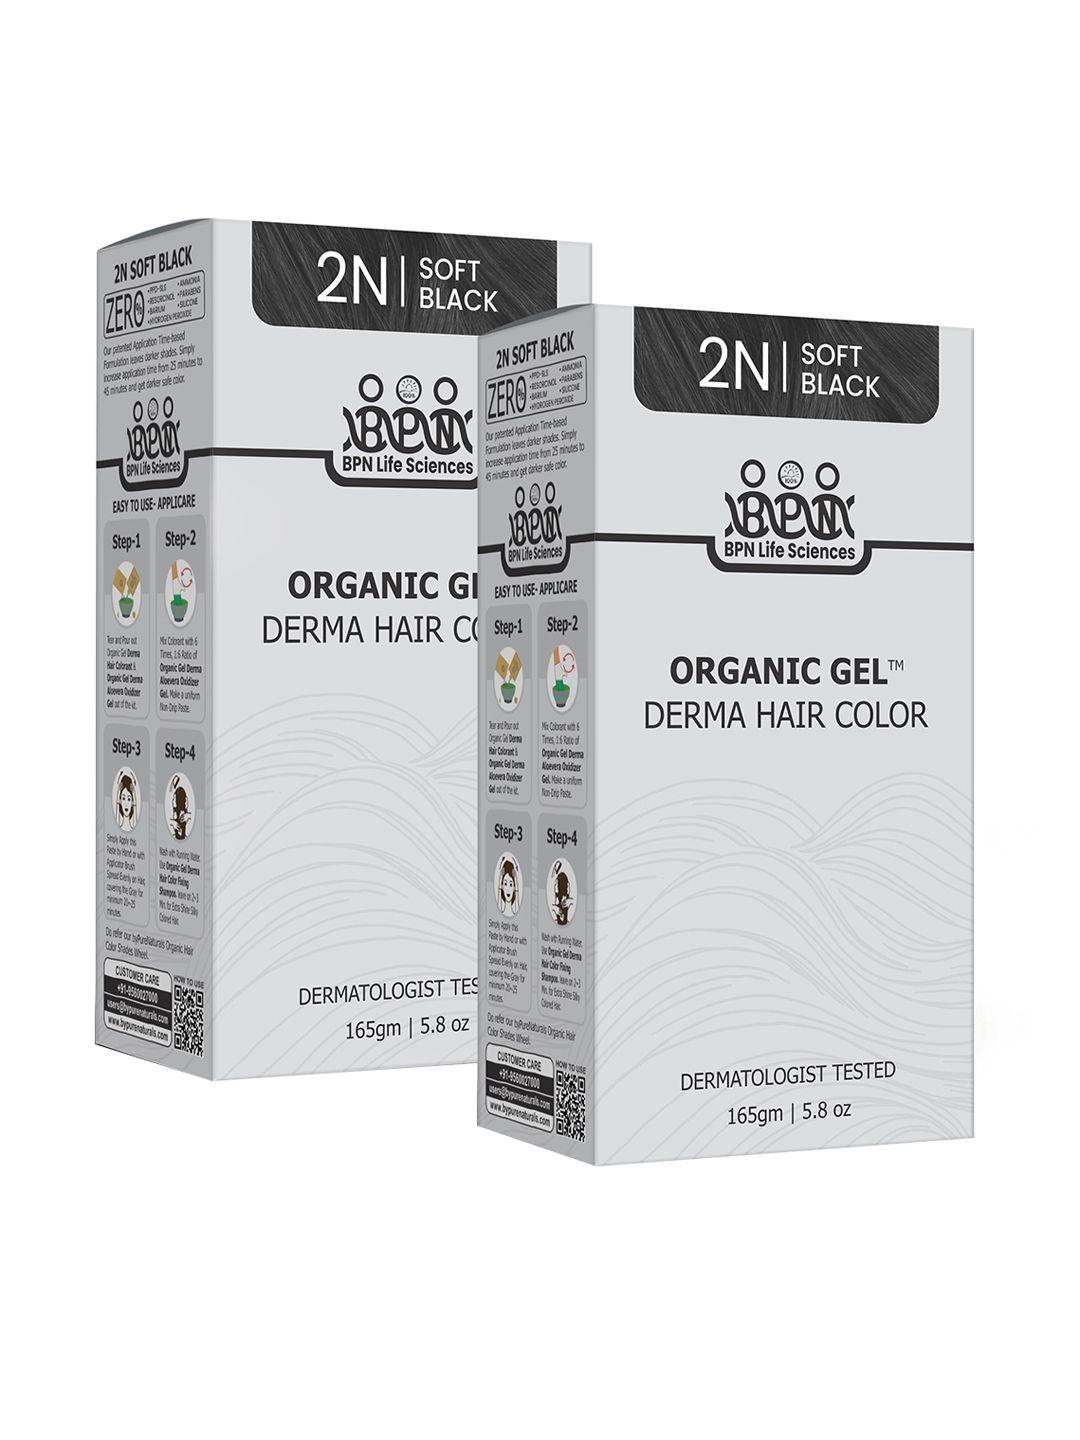 quikhenna set of 2 organic gel derma long hair color 165 g each - soft black 2n